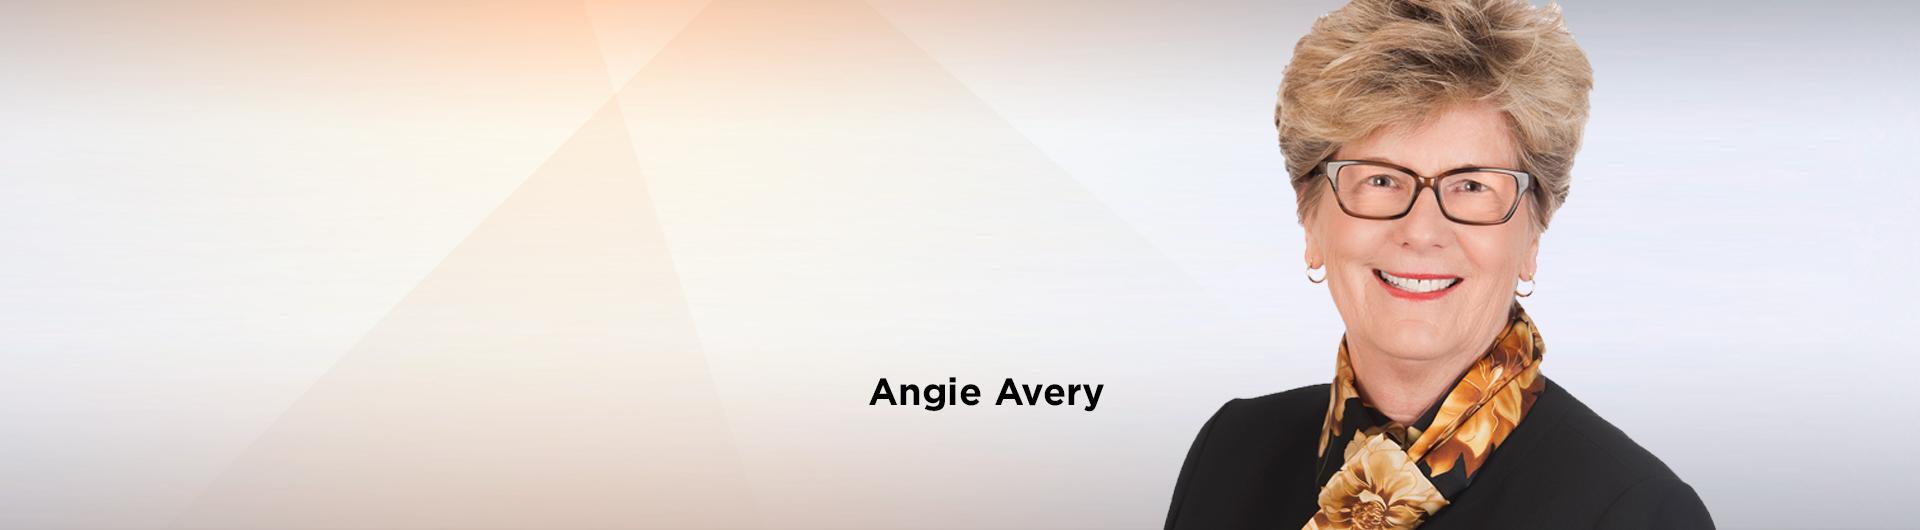 Angie Avery